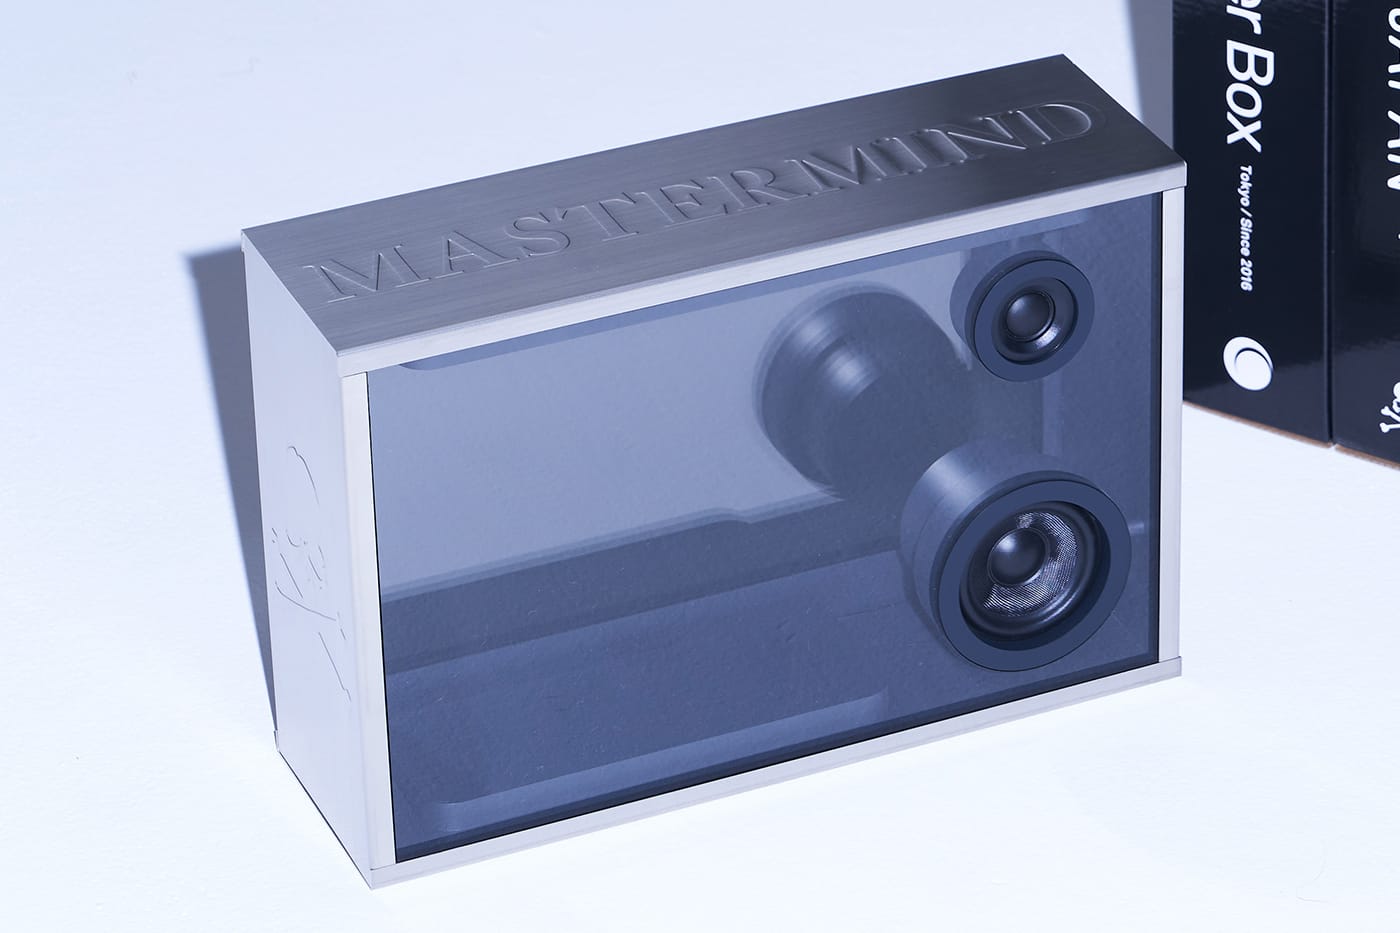 mastermind COTODAMA Lyric Speaker Box